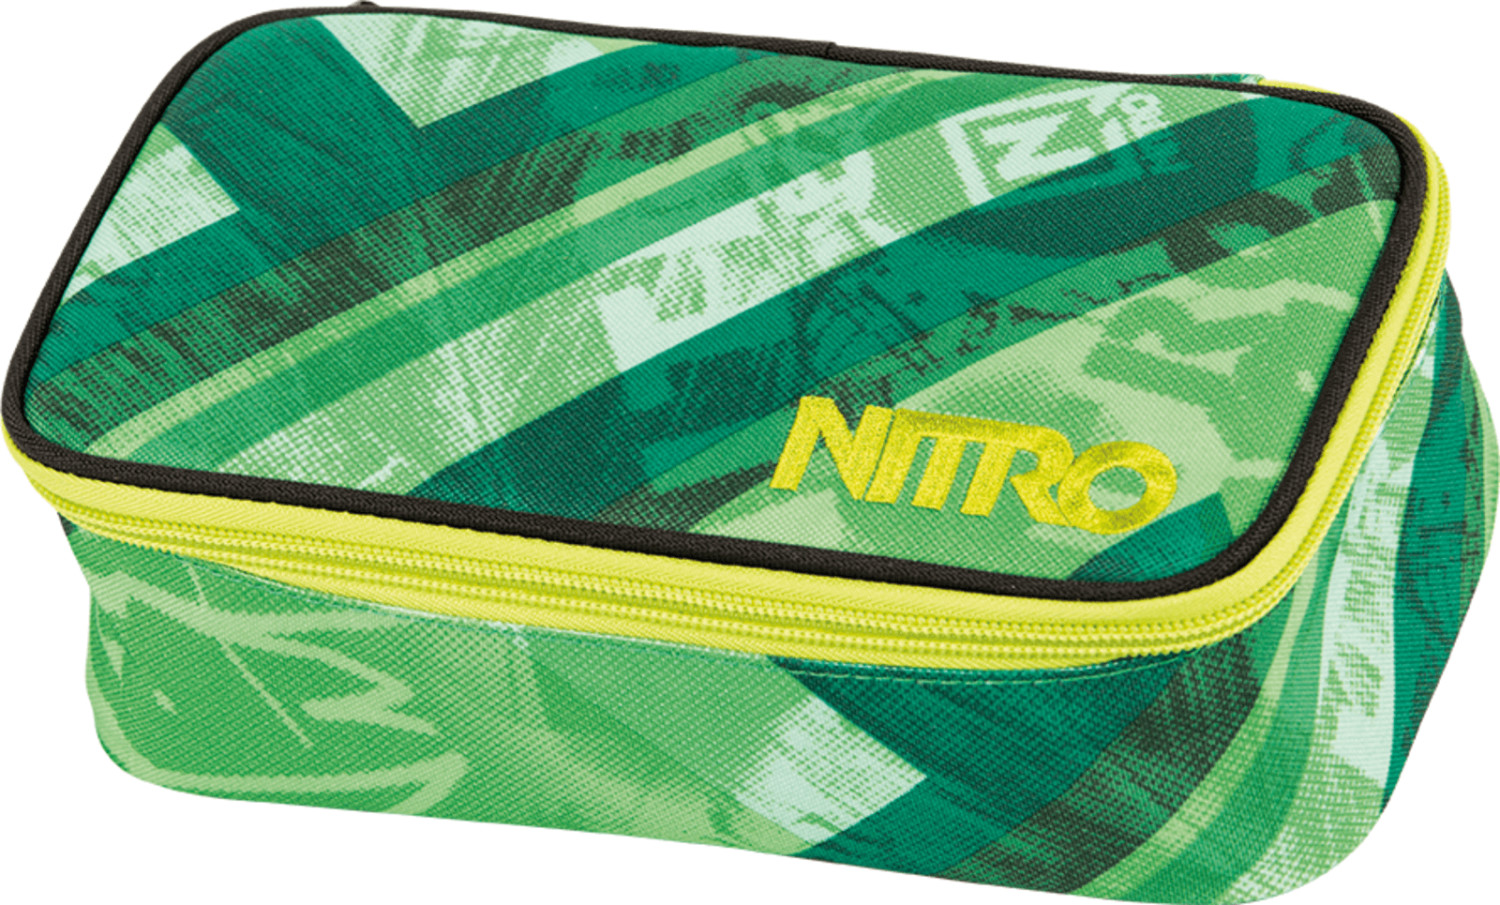 14,99 Nitro bei Pencil Preisvergleich ab € | XL Case